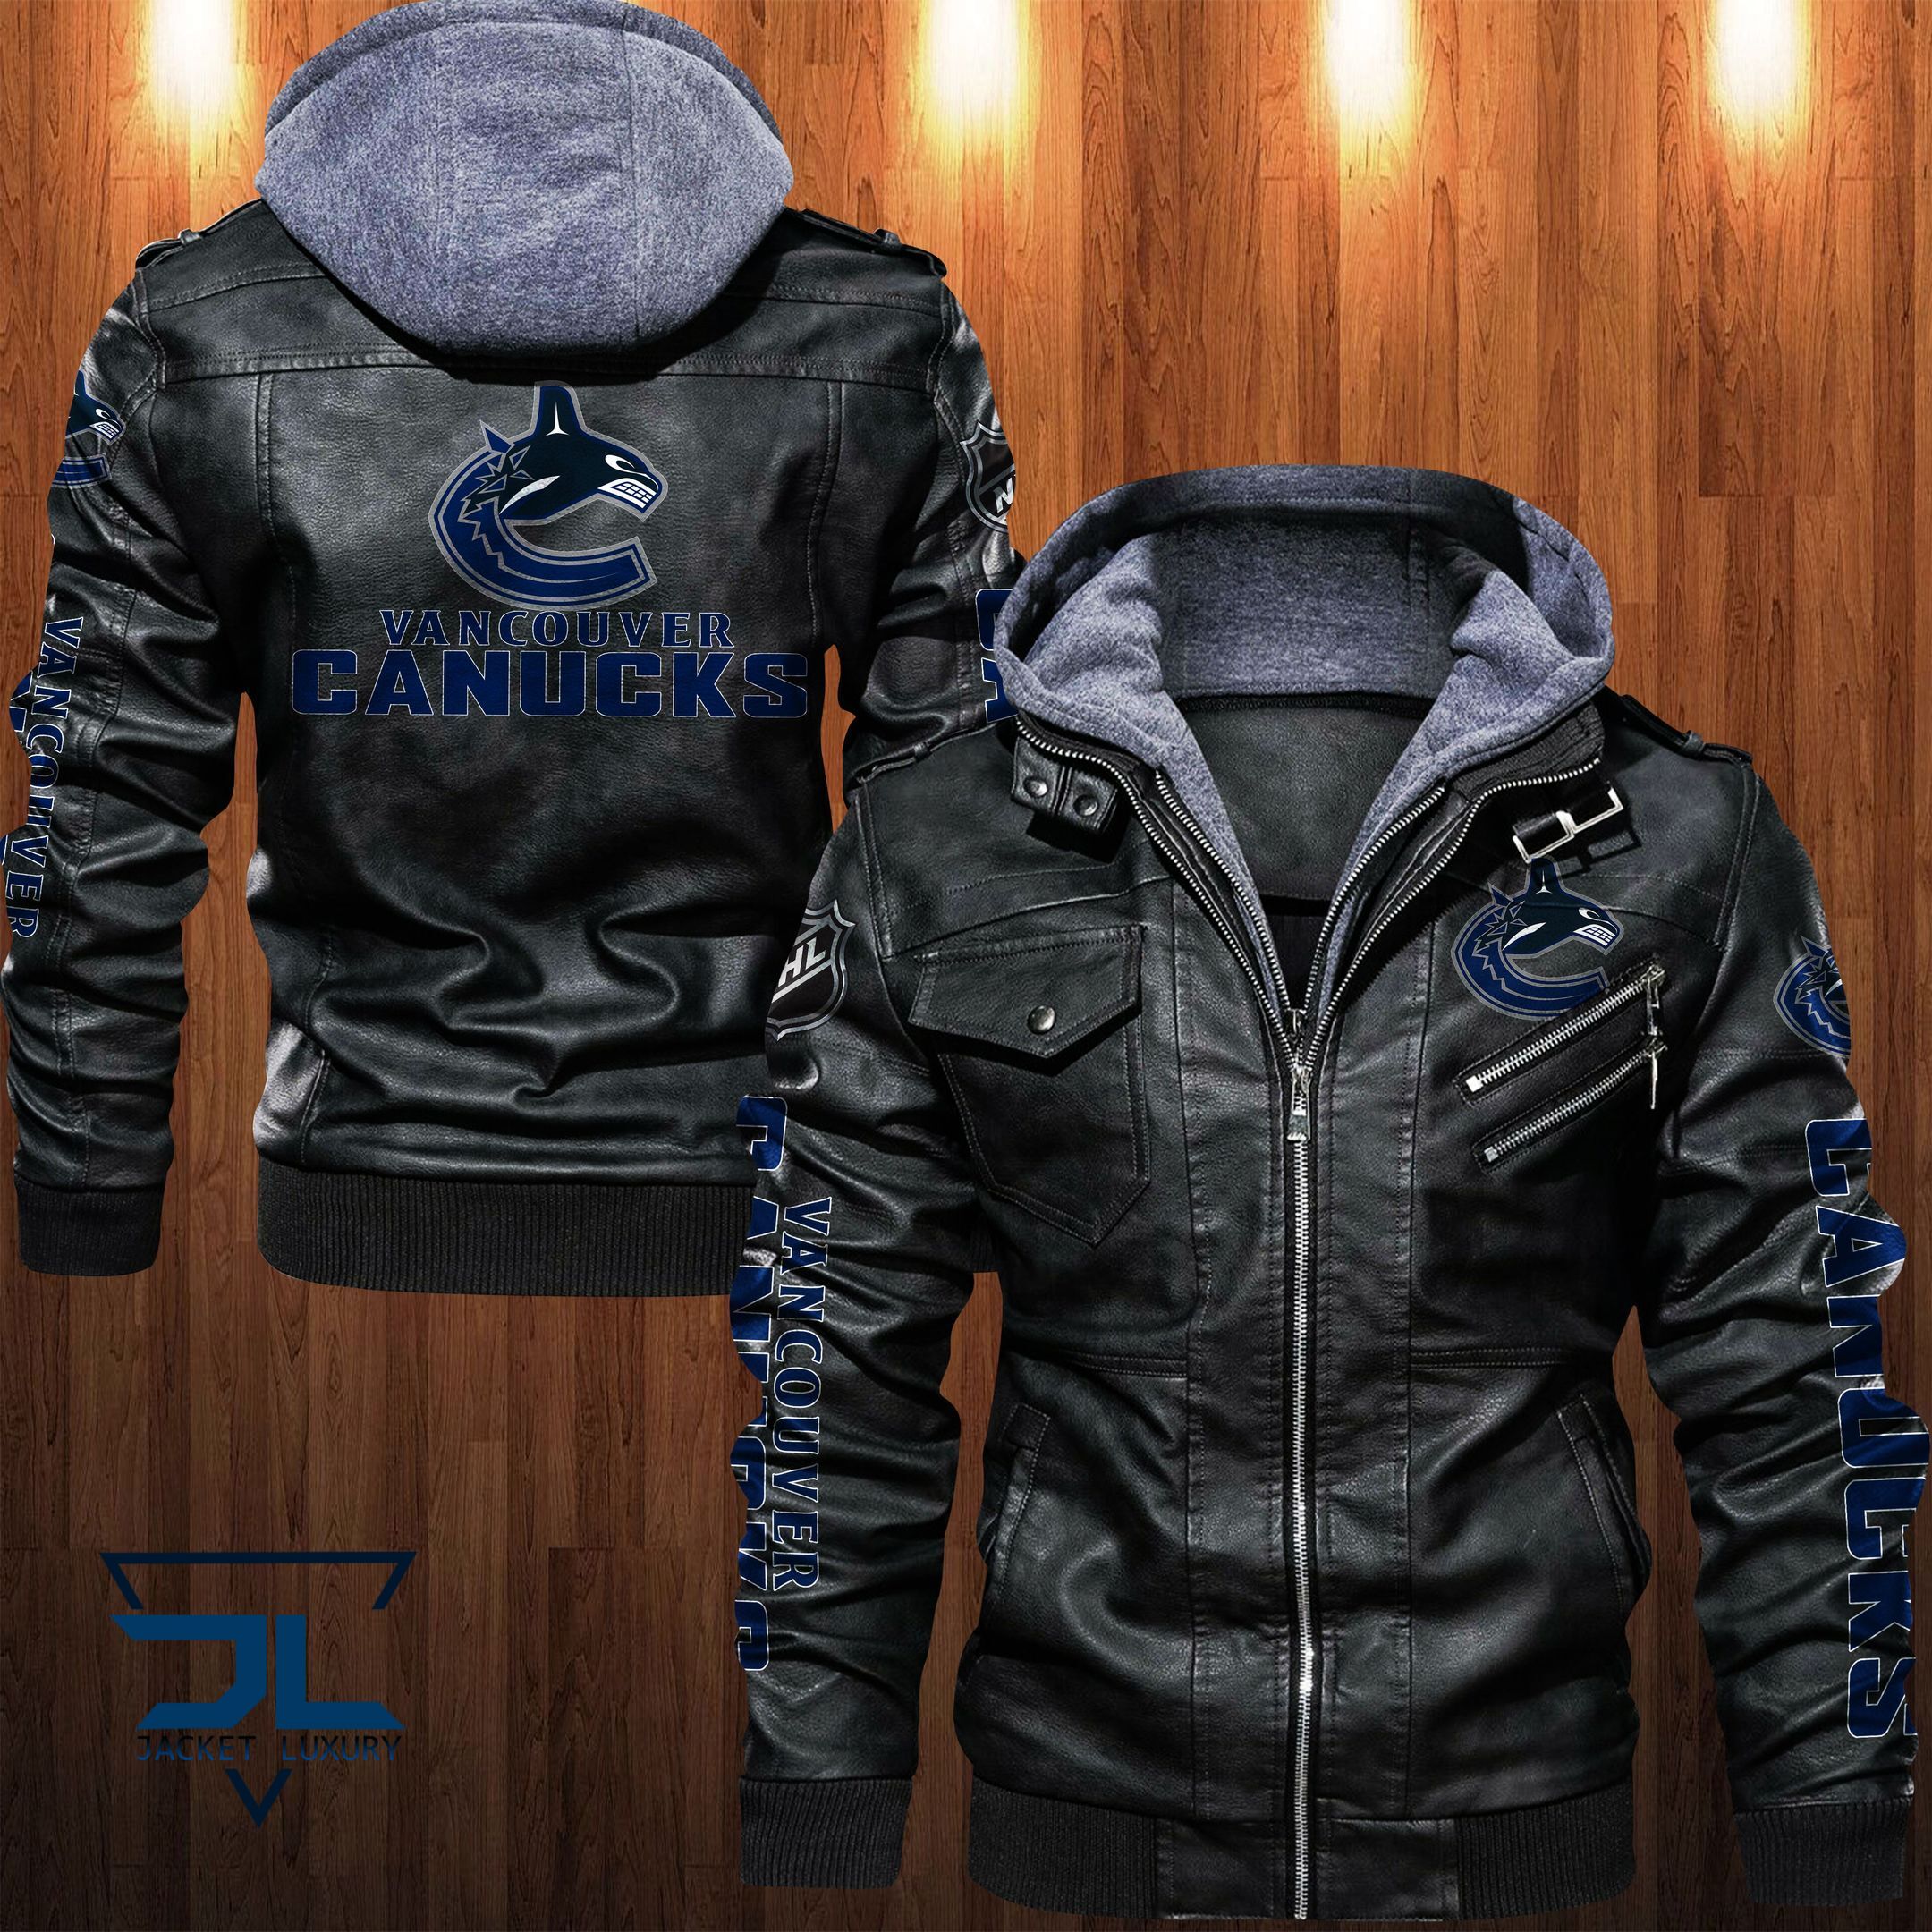 What Leather jacket Sells Best on Techcomshop? 177